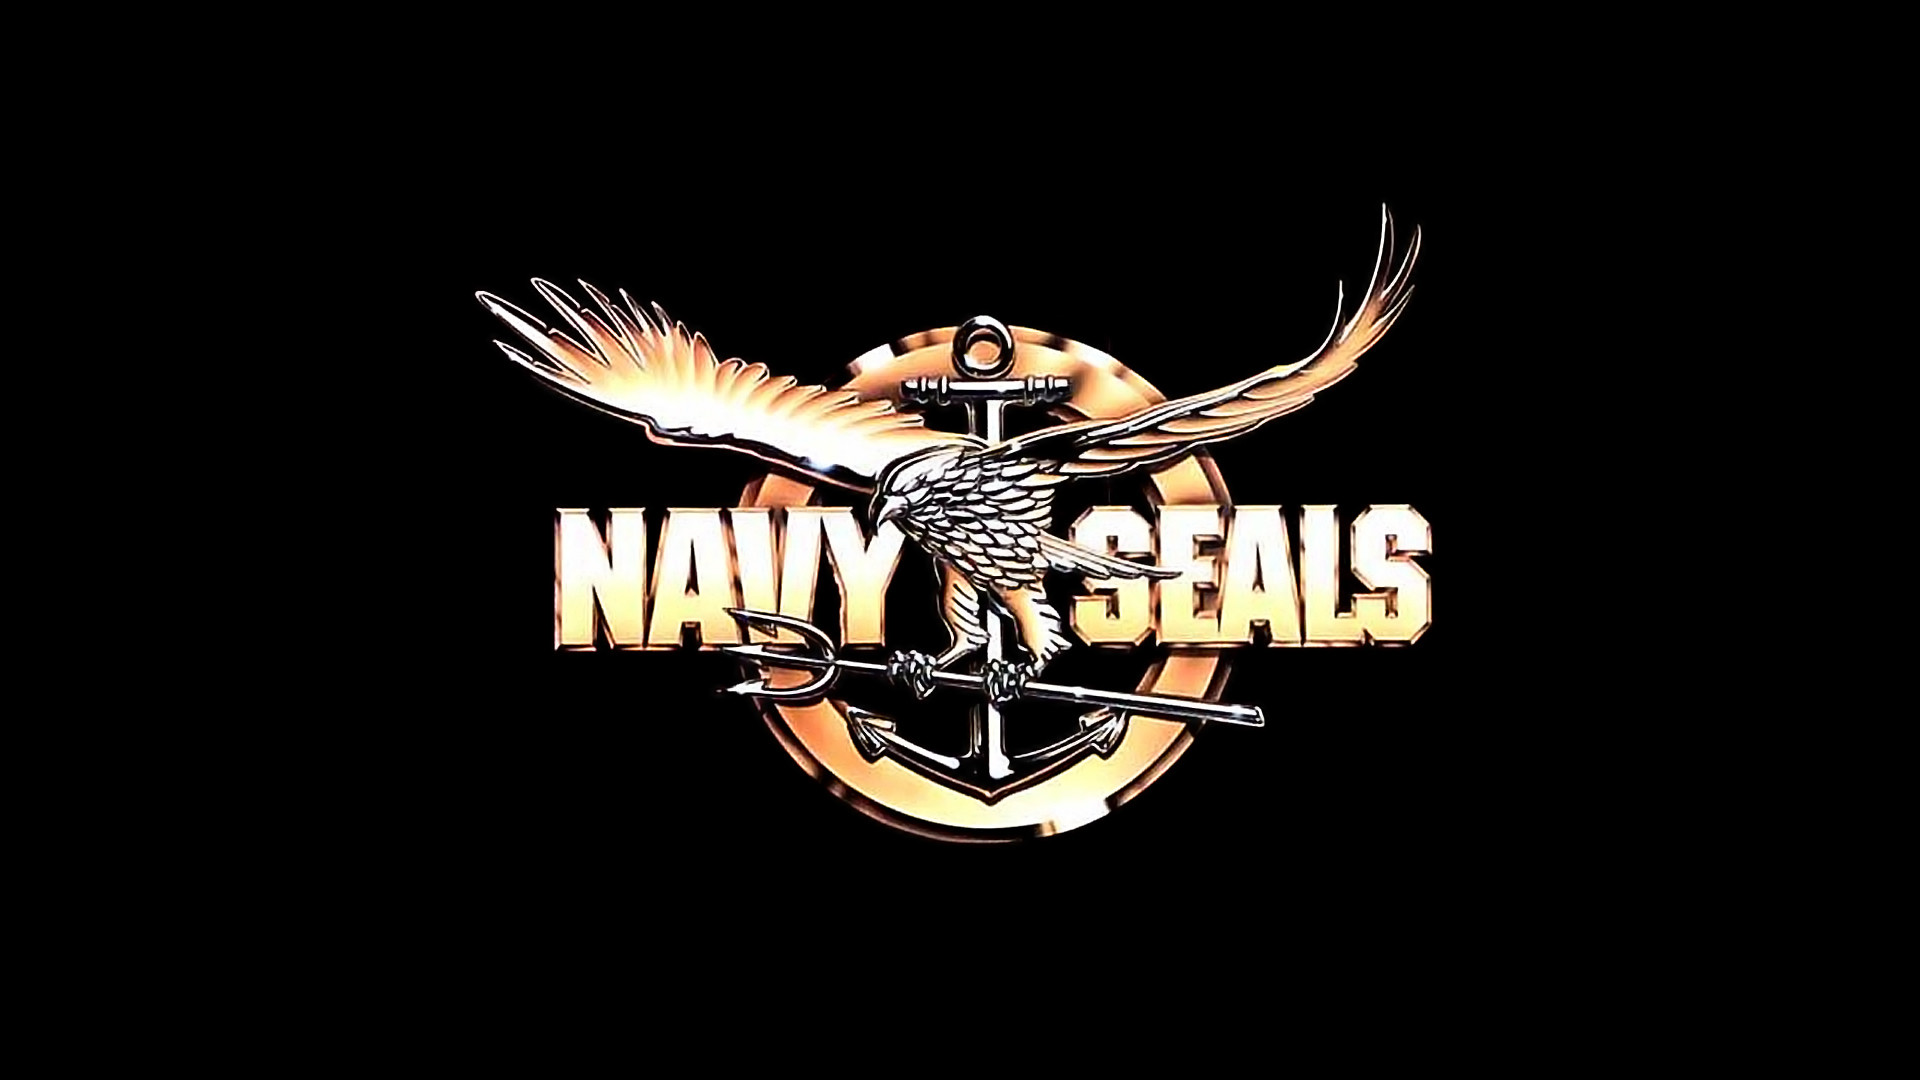 US Navy Seal Logo Wallpaper 56 images